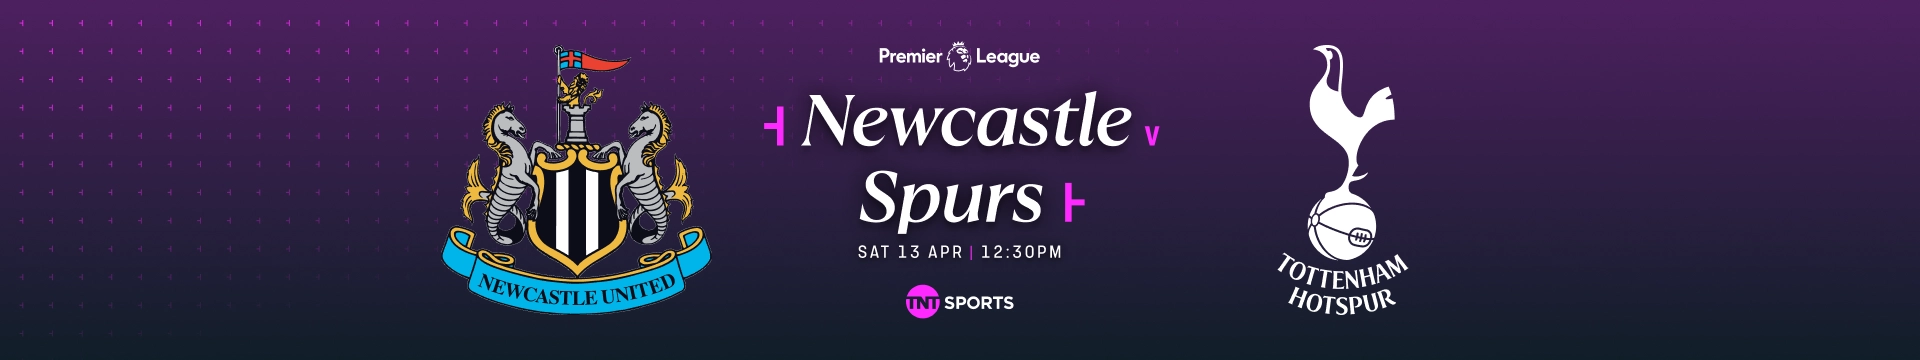 Newcastle v Spurs Saturday 13 April at 12:30pm